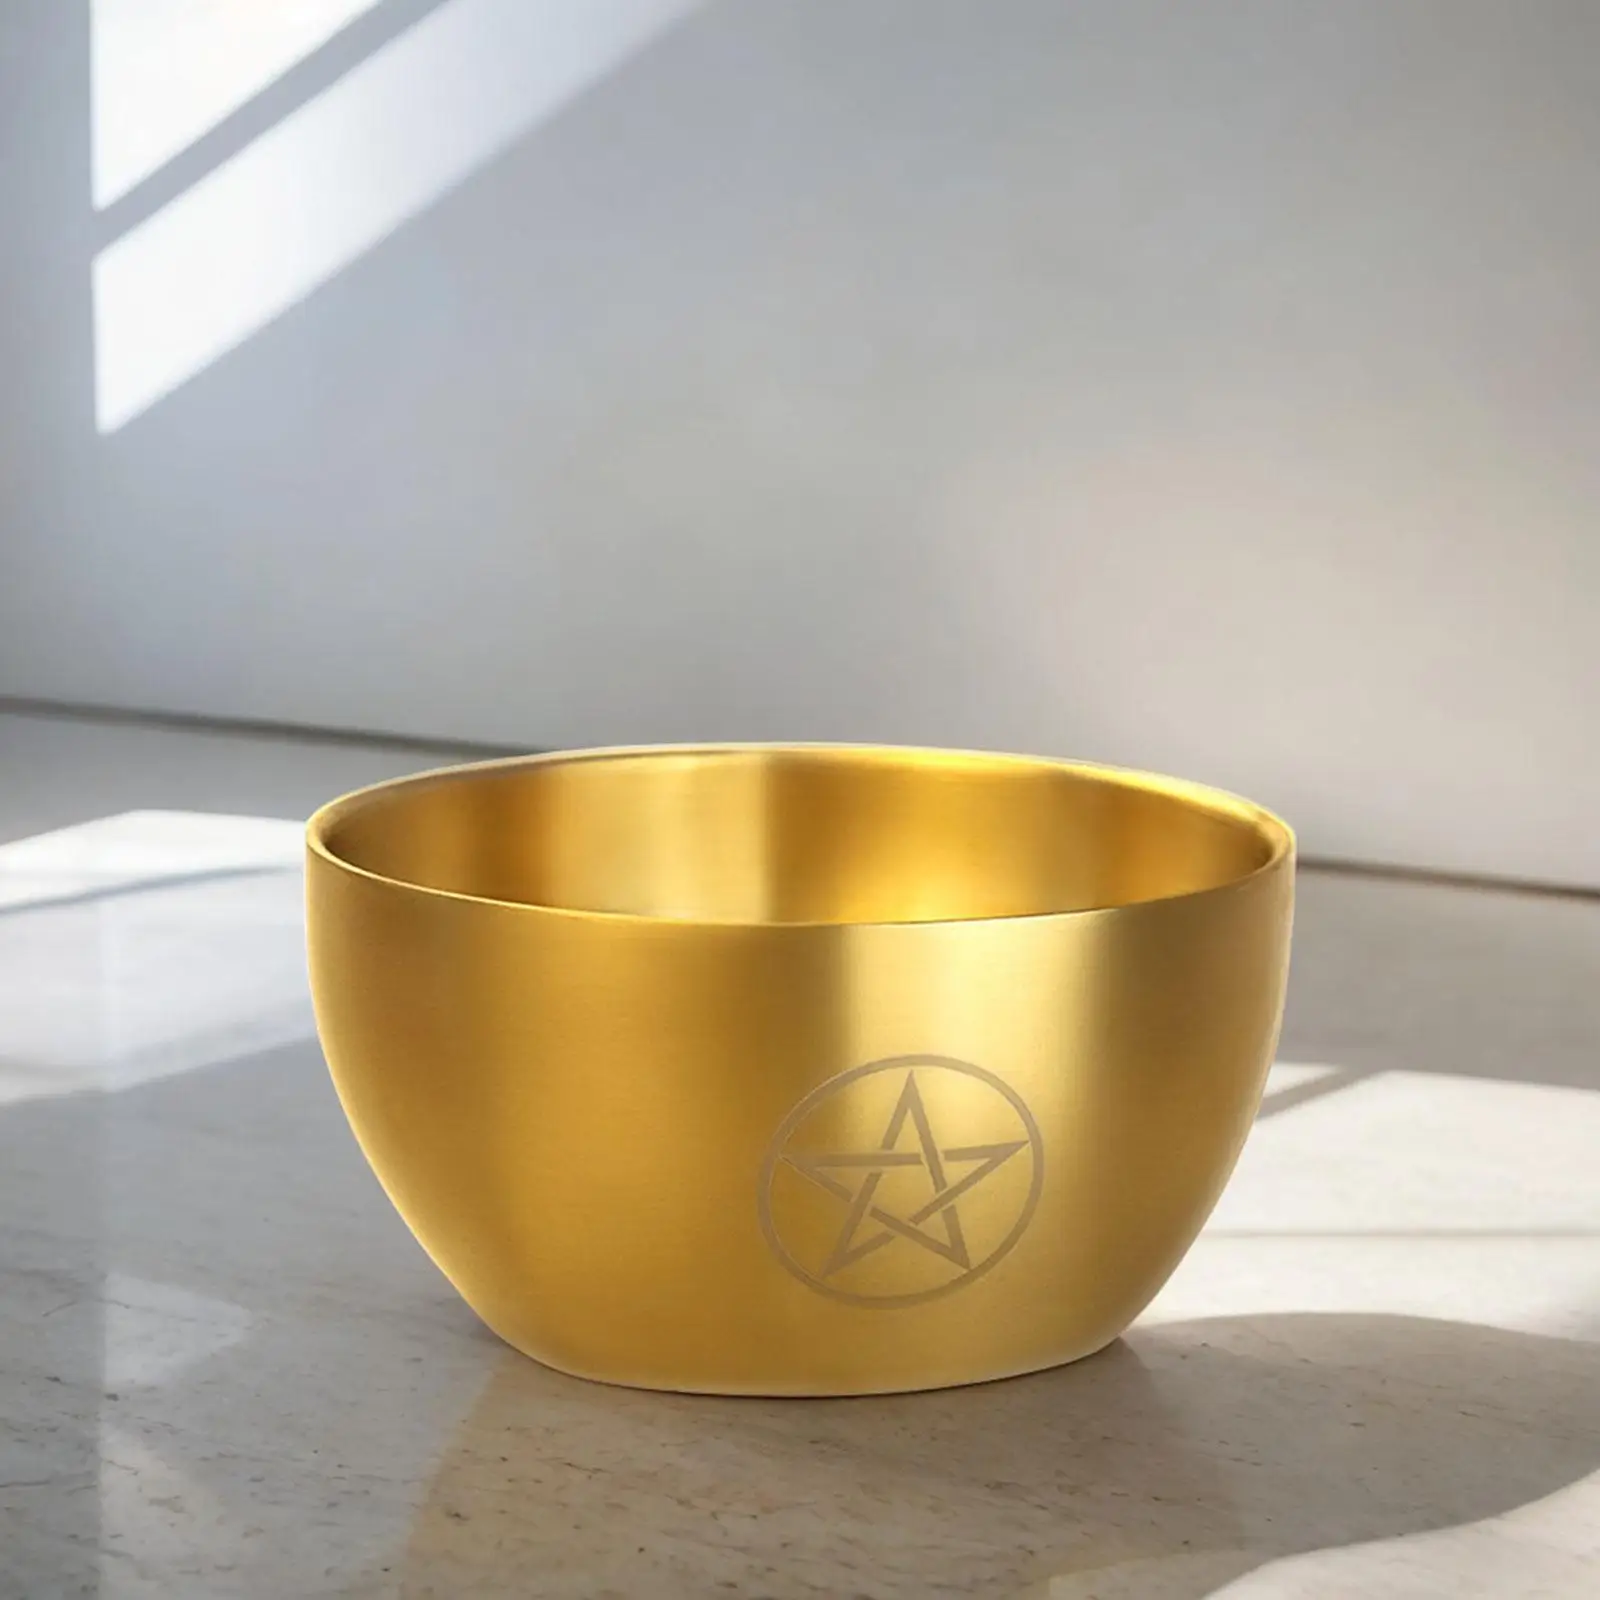 Yoga Meditation Bowl Ritual Smudging Decoration Buddha Worship Supplies Buddhist Offering Bowl Stainless Steel Tibetan Bowl